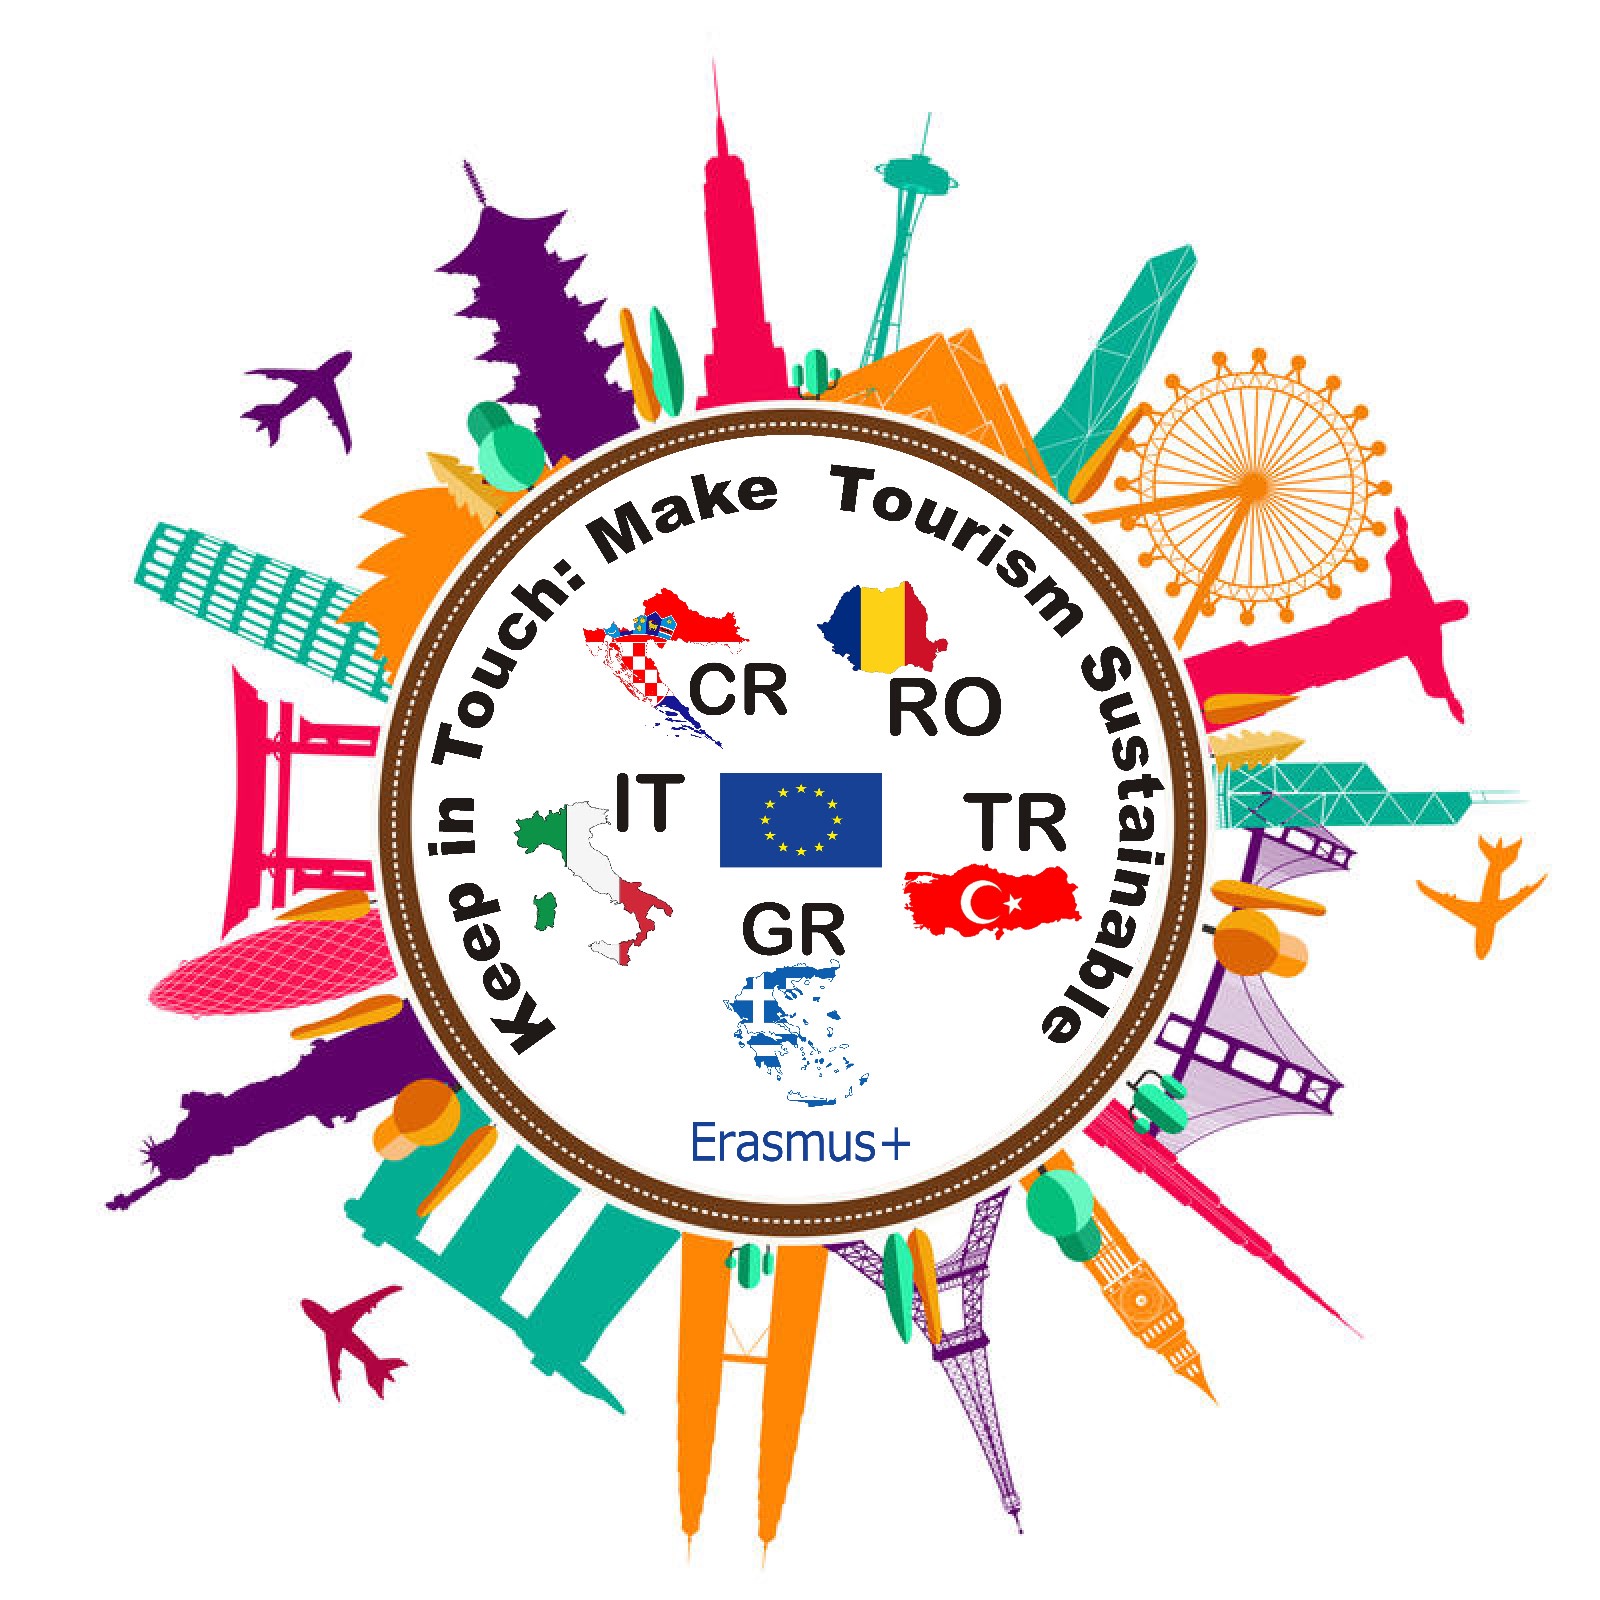 Tο Βενετόκλειο – 1ο ΓΕΛ Ρόδου συμμετέχει σε ευρωπαϊκό πρόγραμμα Εrasmus+ με θέμα τη “βιώσιμη τουριστική ανάπτυξη”.